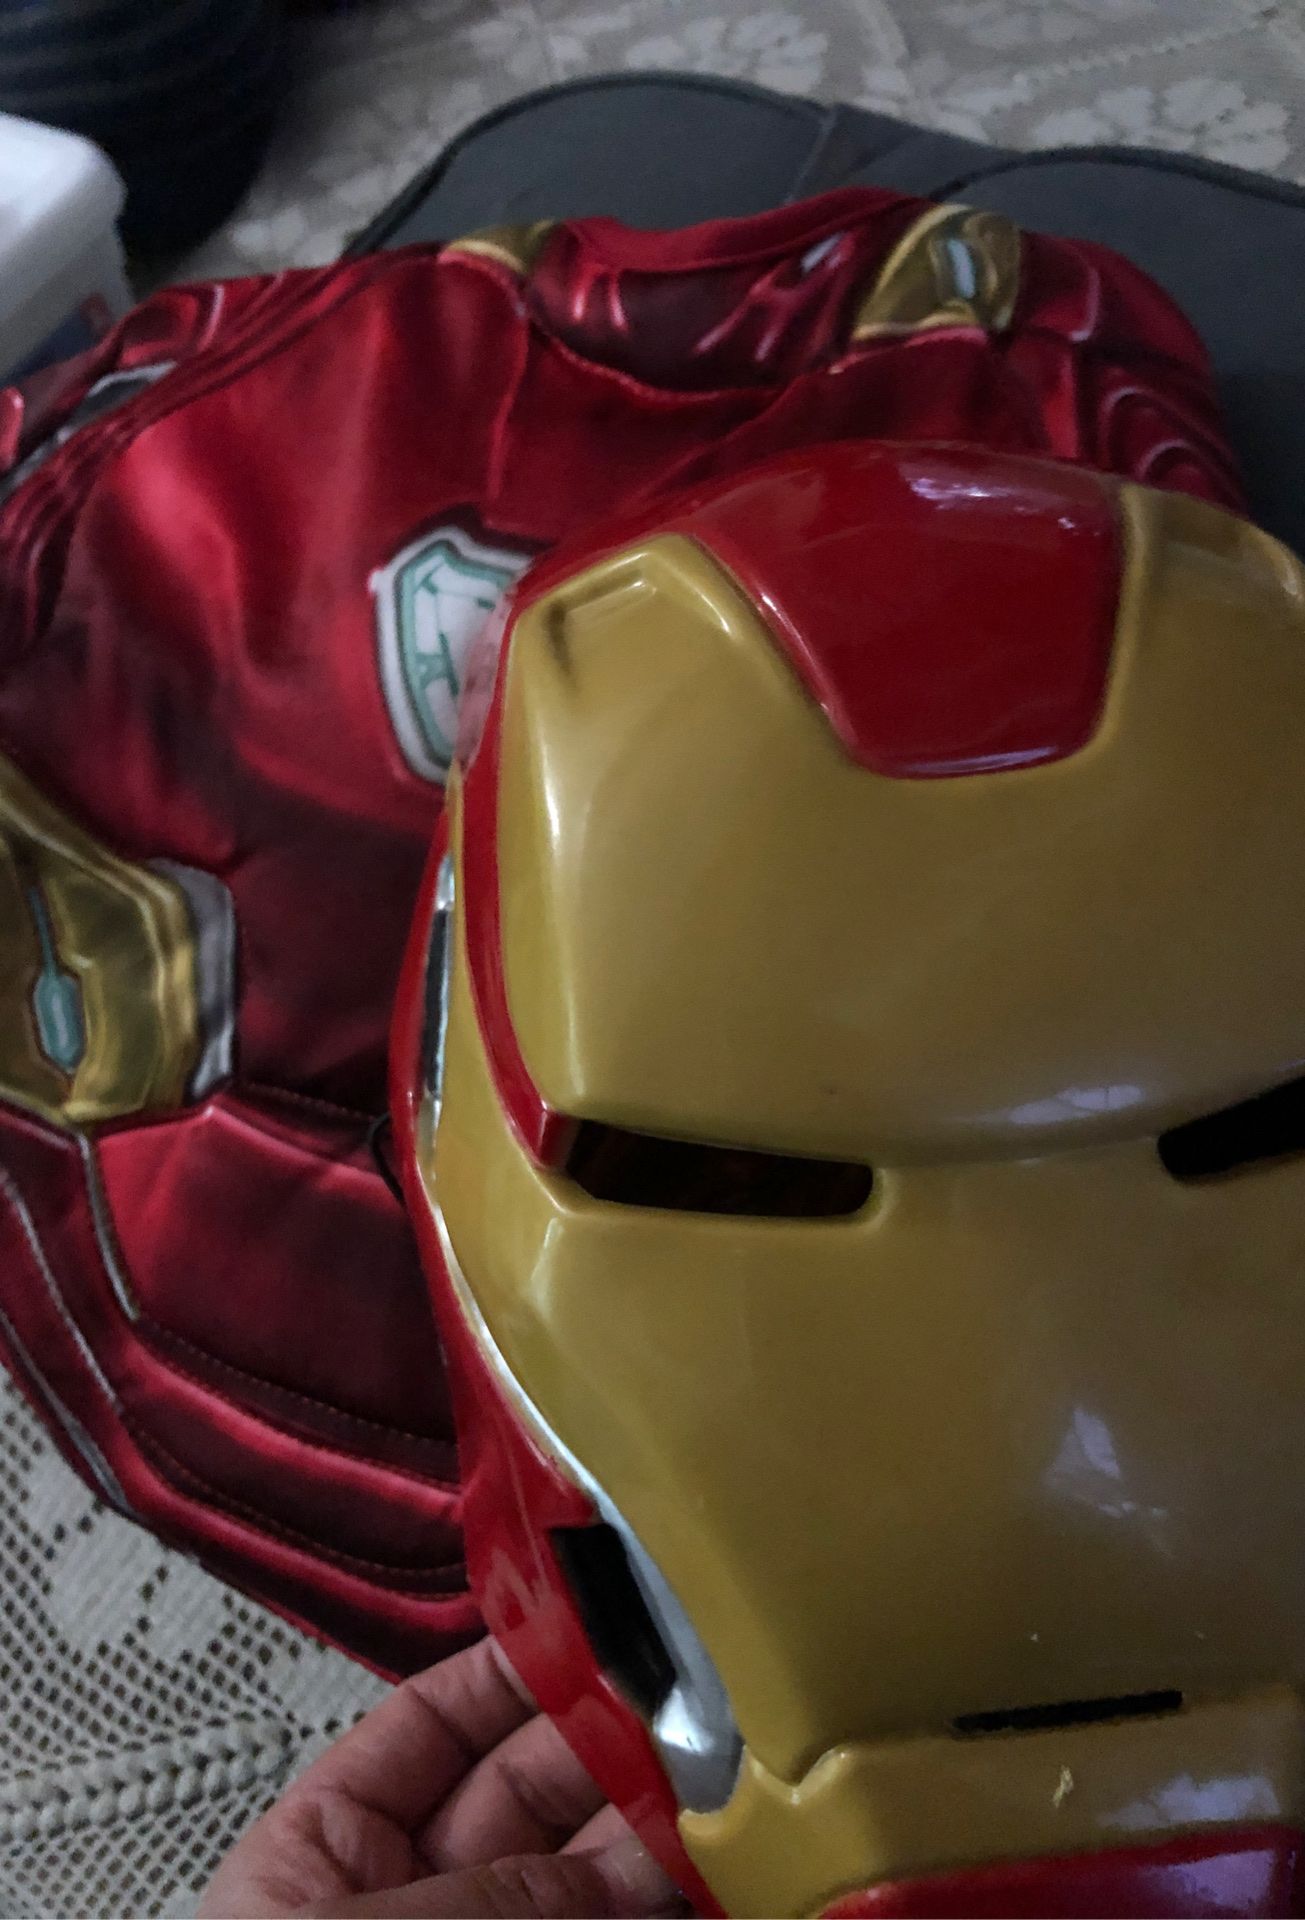 Iron Man costume